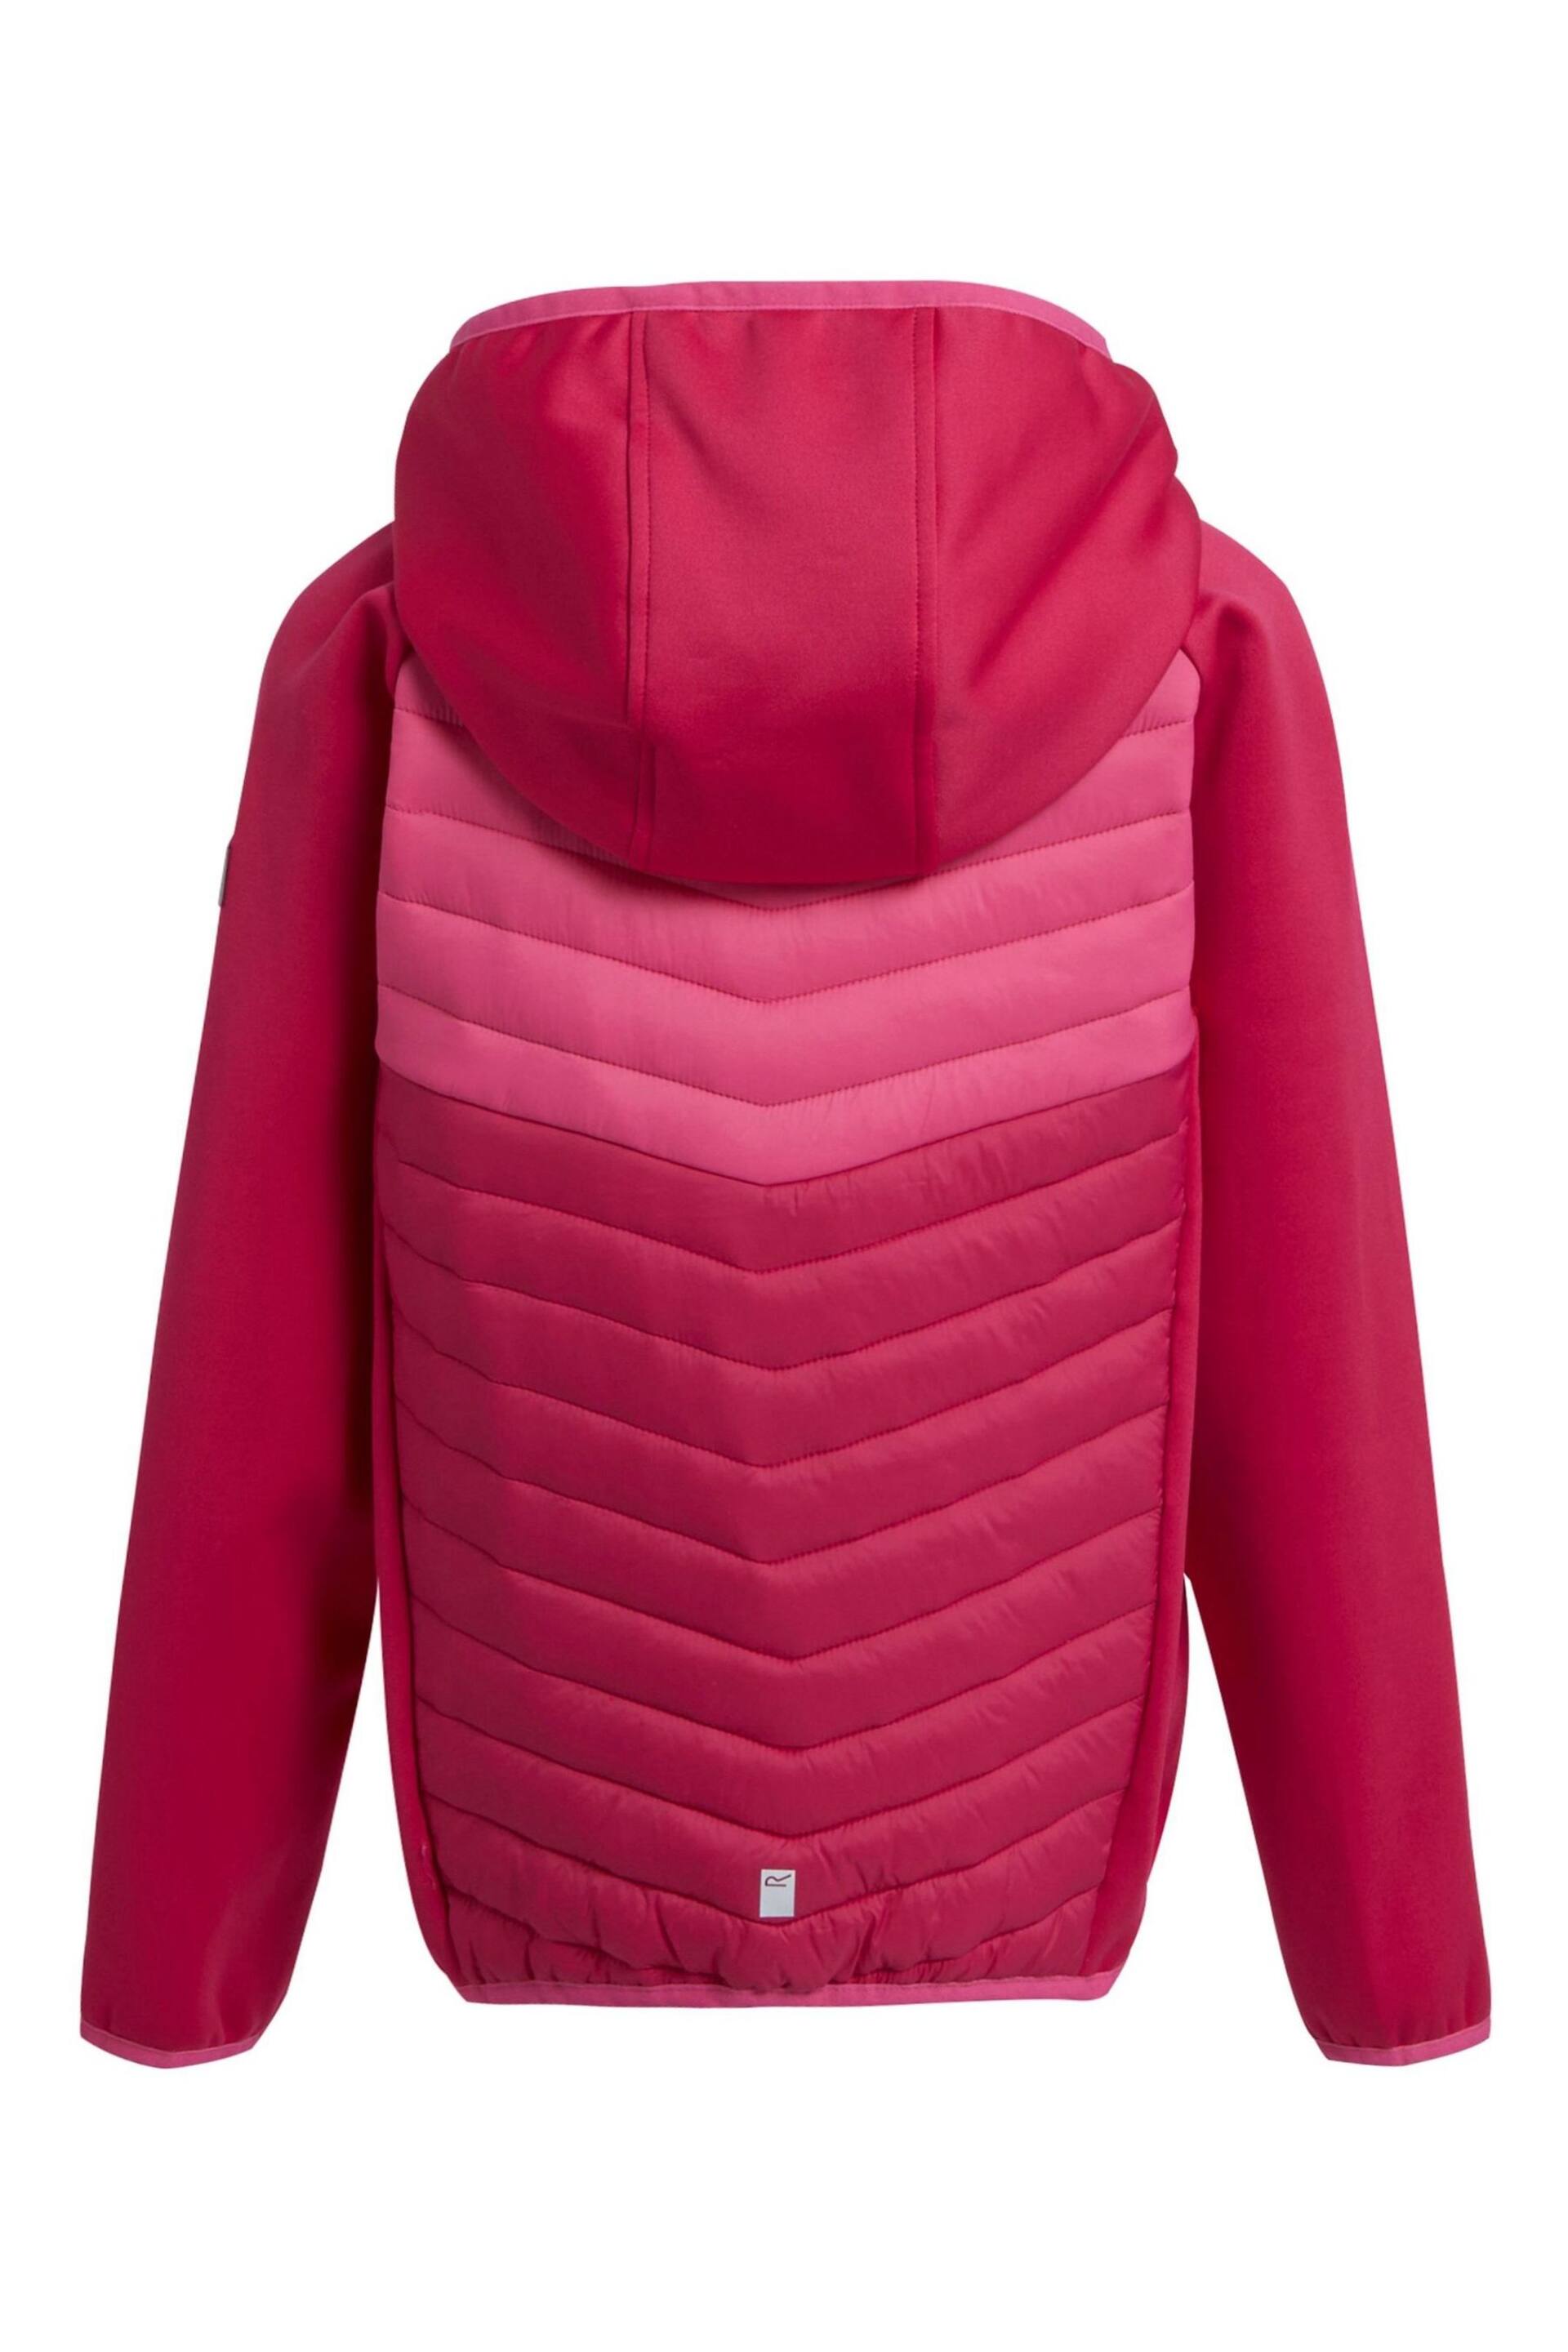 Regatta Pink Kielder Hybrid VIII Stretch Hooded Jacket - Image 6 of 7